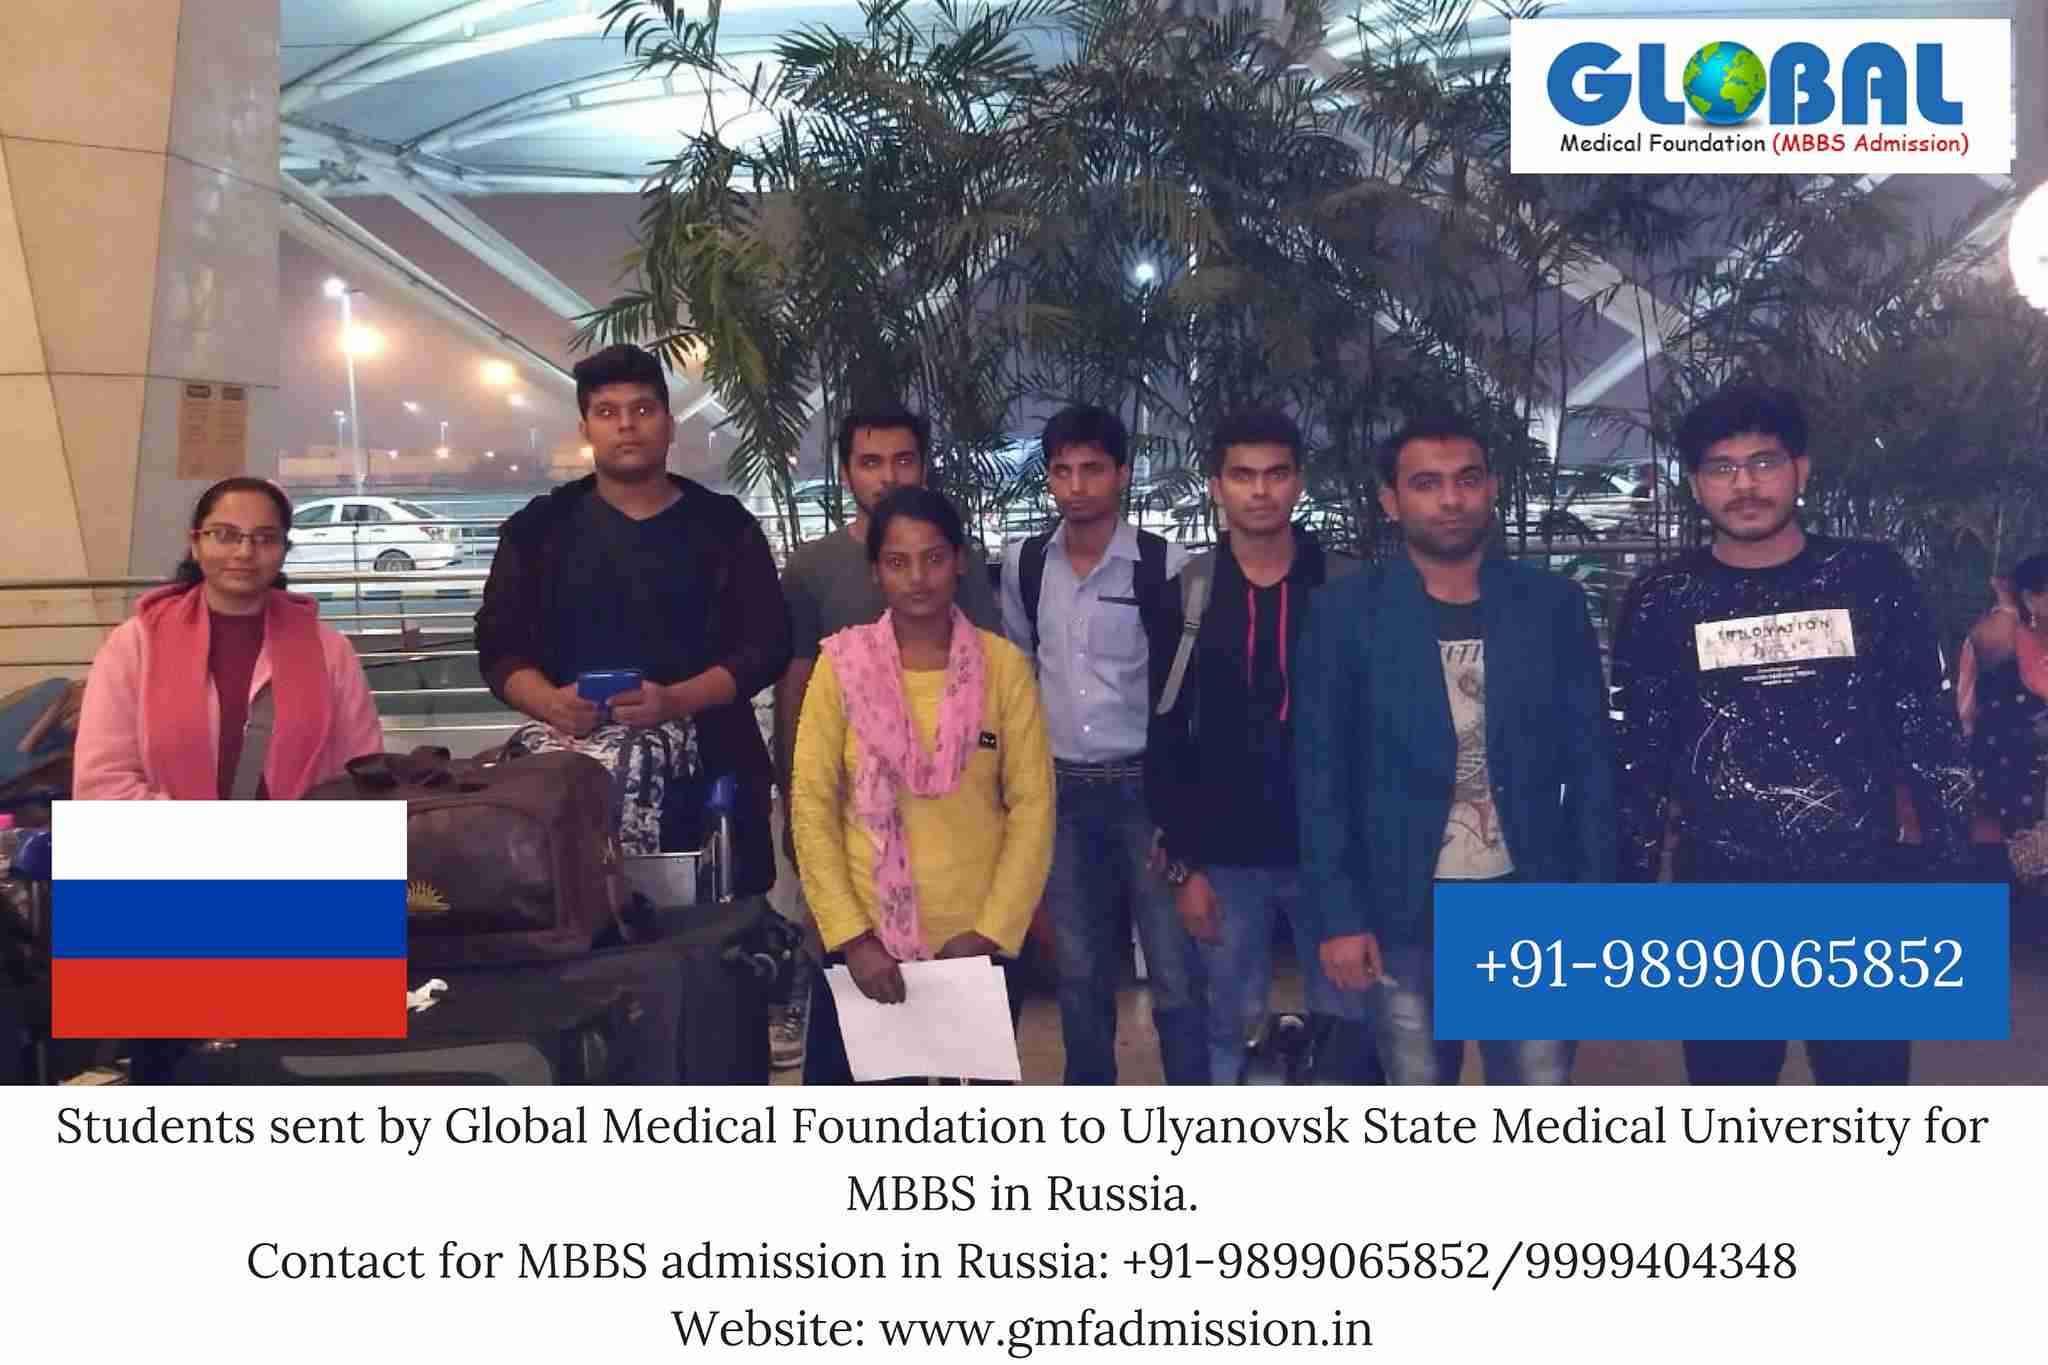 Student sent by Global Medical Foundation to Ulyanovsk State Medical University.